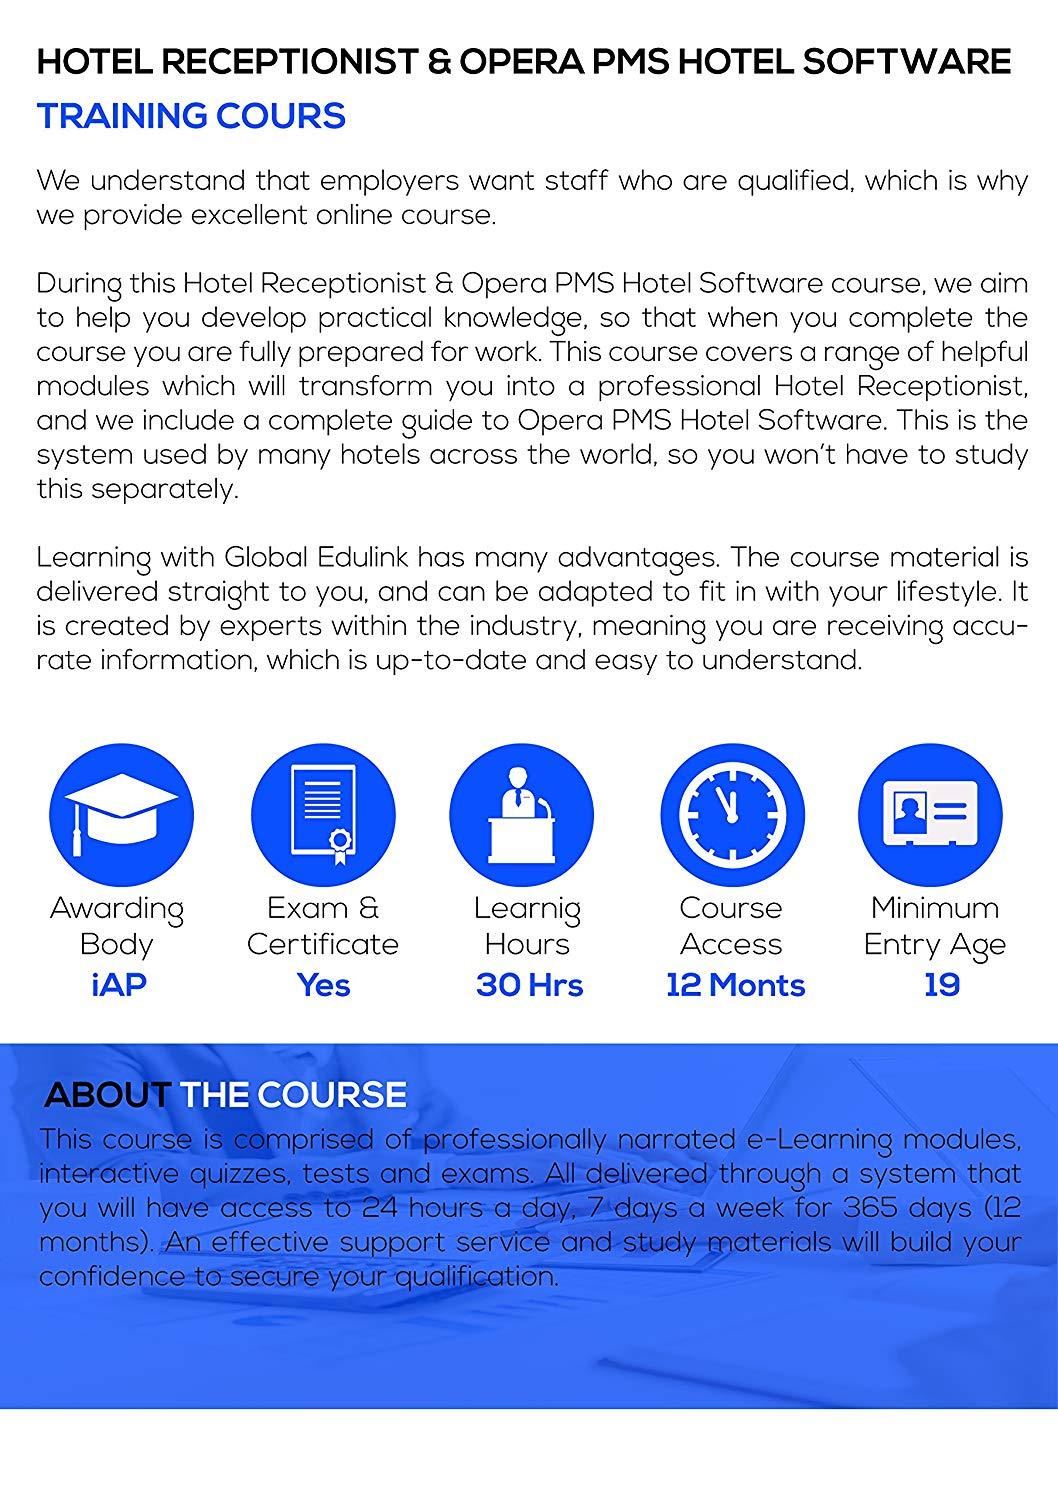 Opera PMS Logo - Opera PMS Hotel Software Training Course [Online Code]: Amazon.co.uk